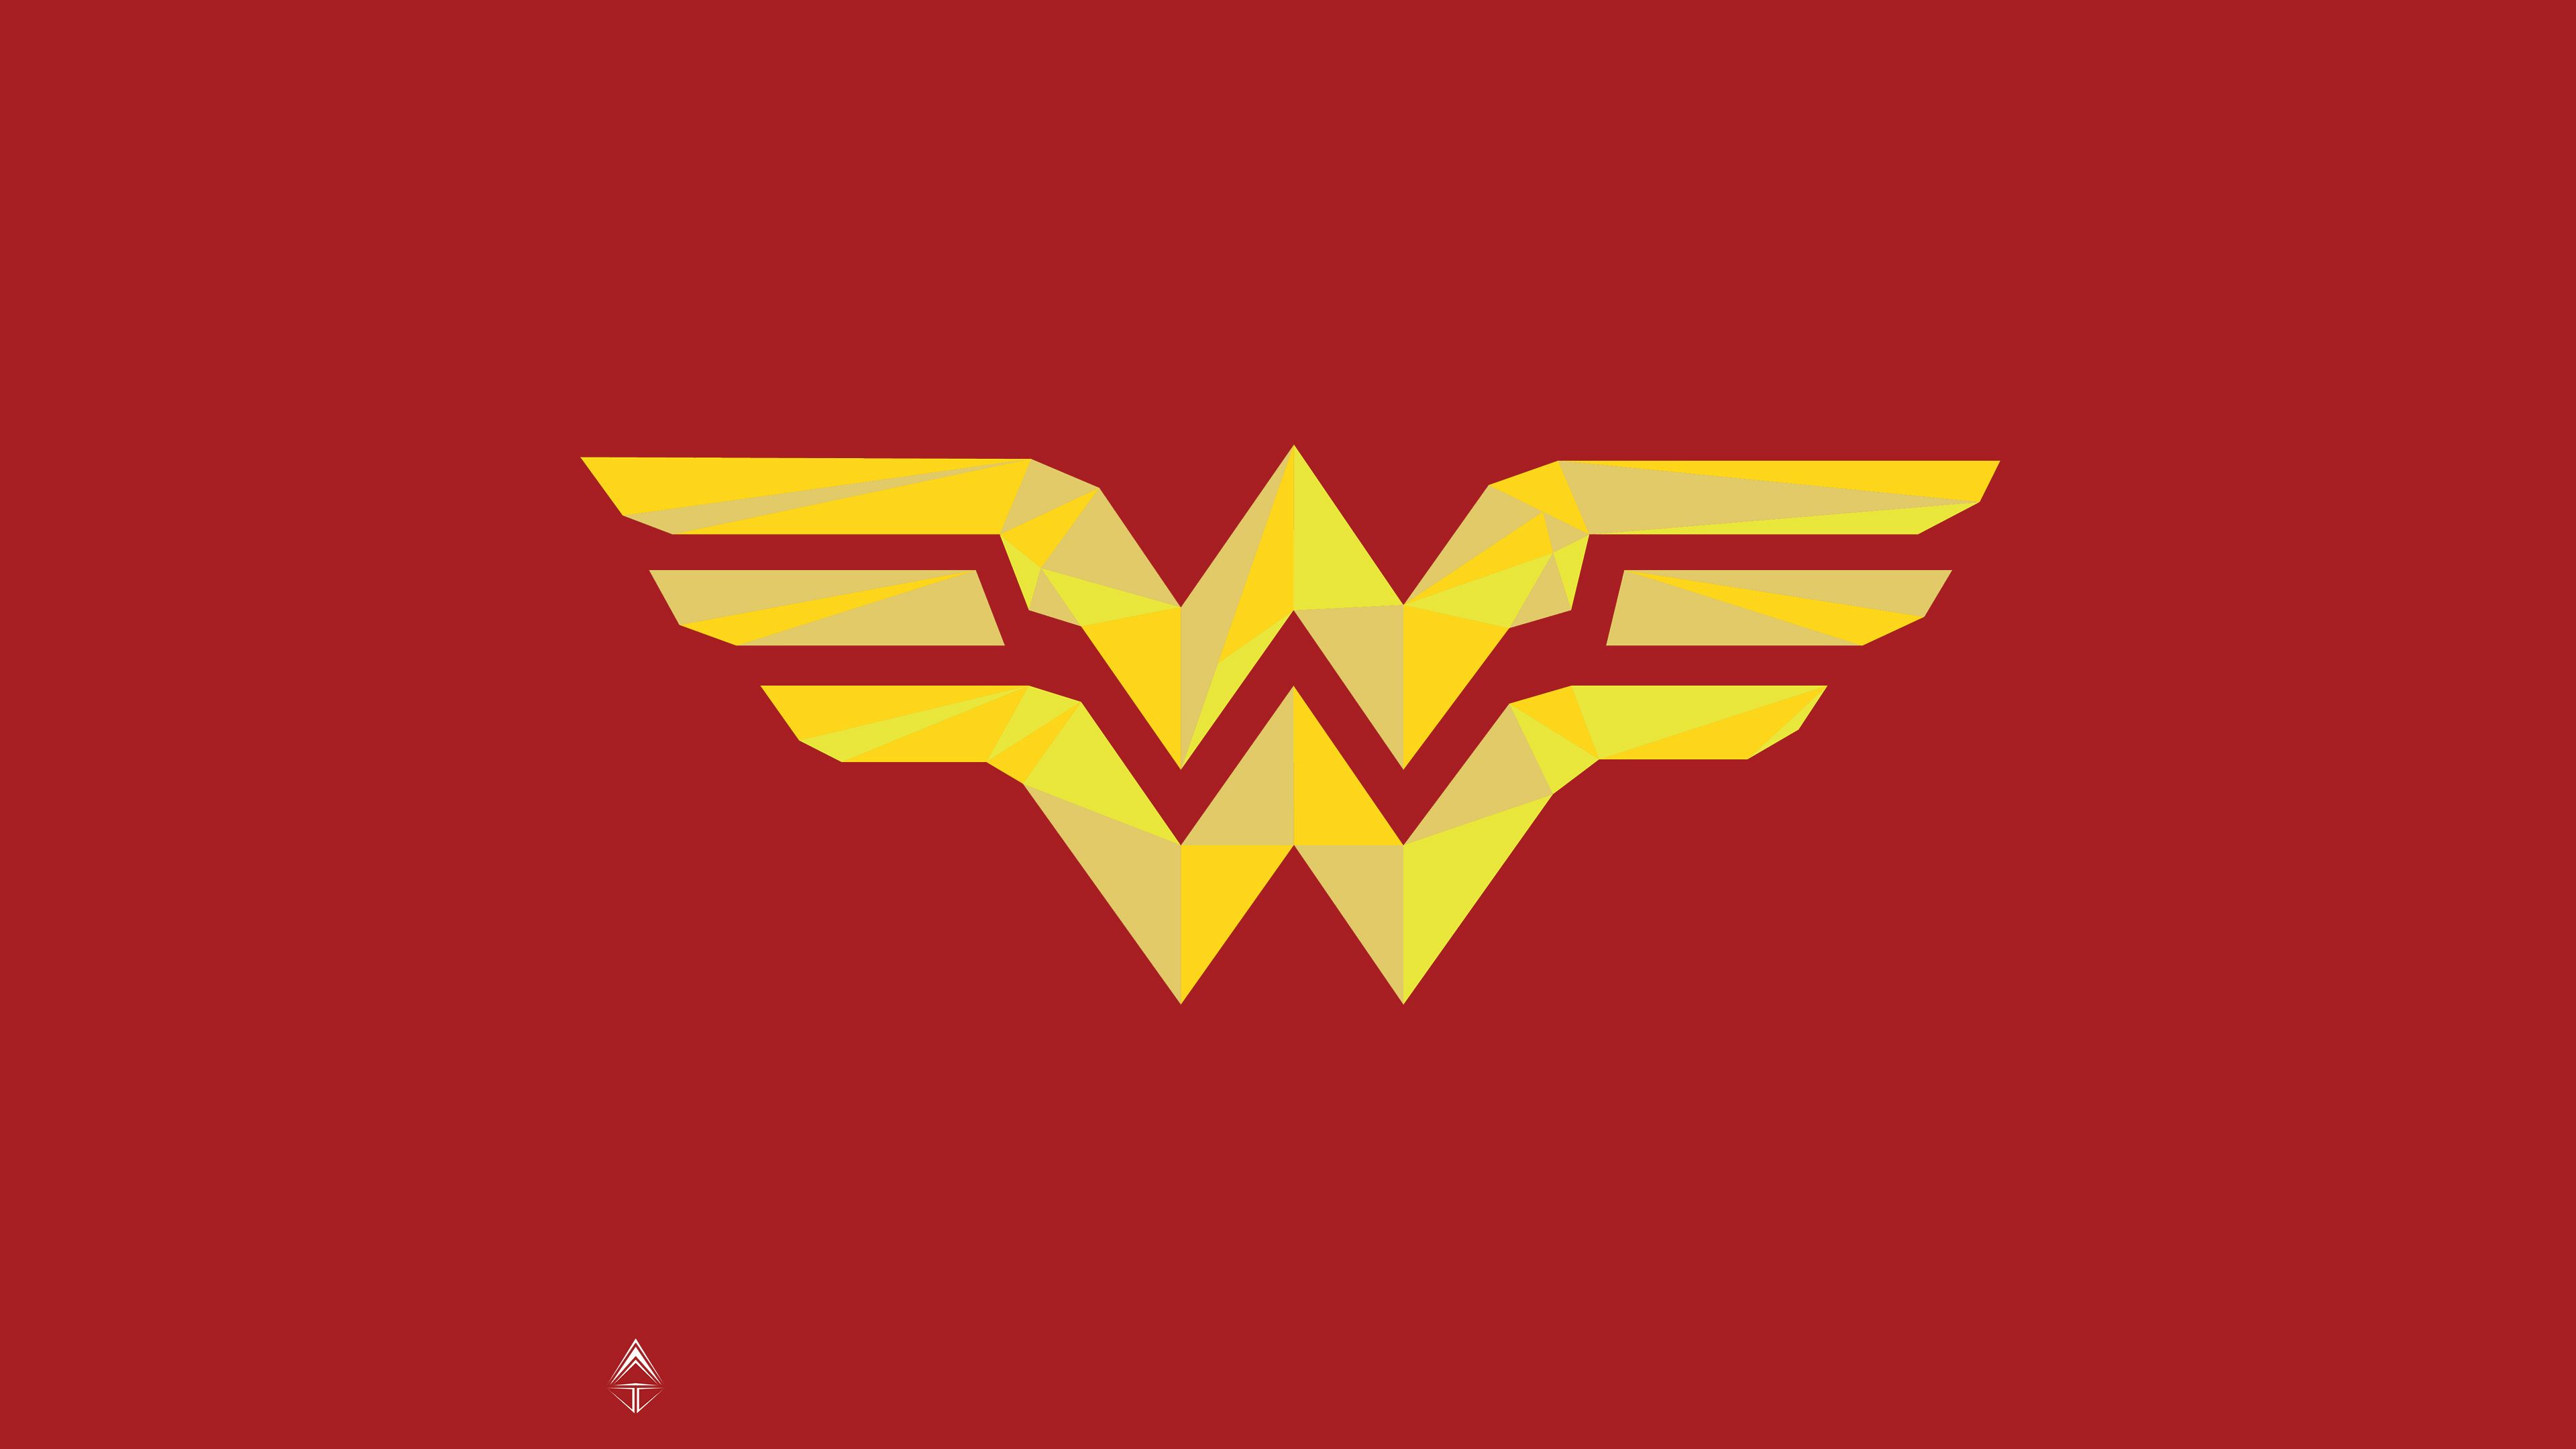 Wonder Woman Logo 4k Artwork, HD Superheroes, 4k Wallpaper, Image, Background, Photo and Picture